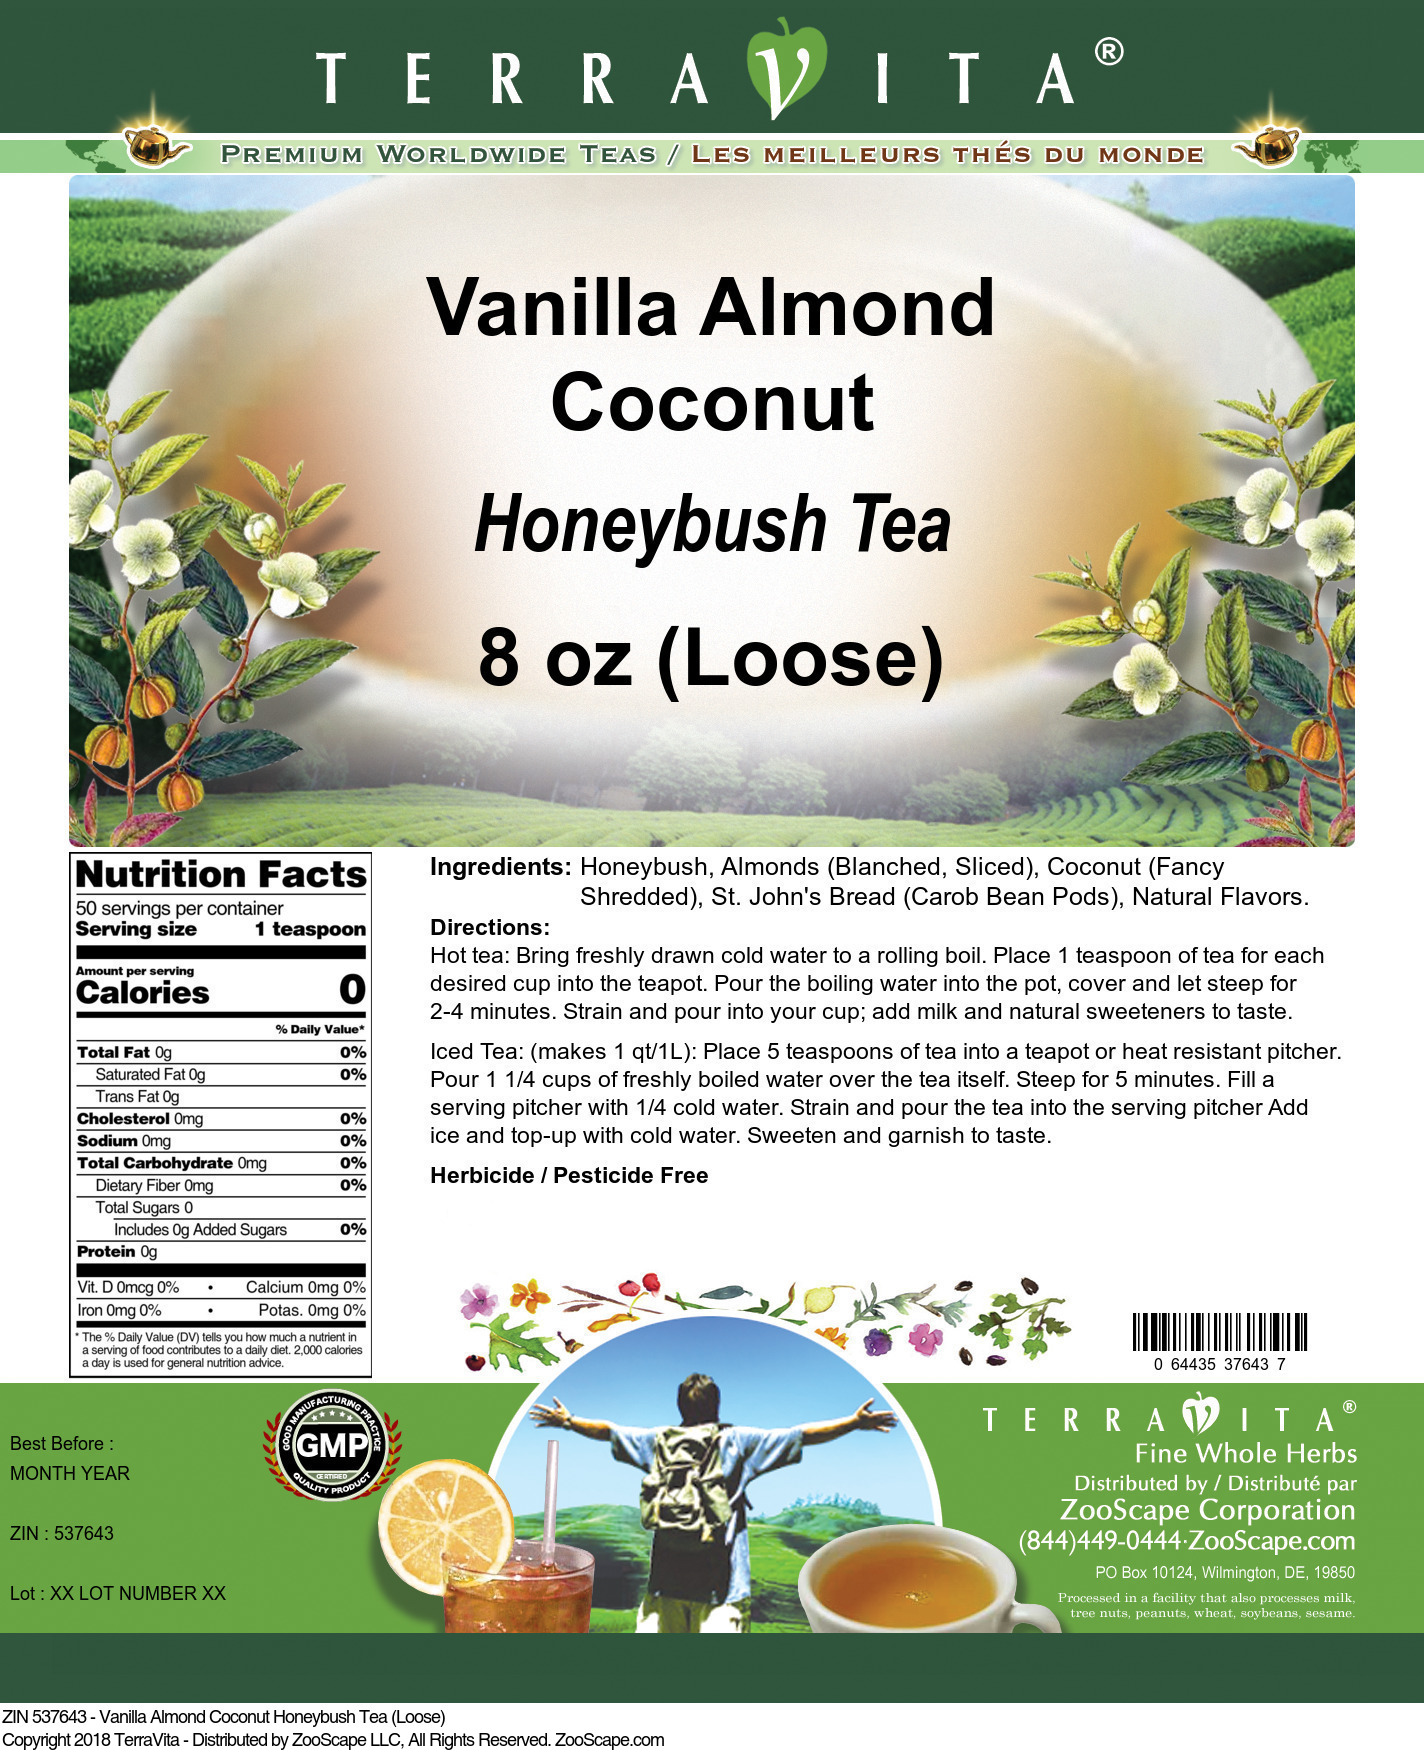 Vanilla Almond Coconut Honeybush Tea (Loose) - Label